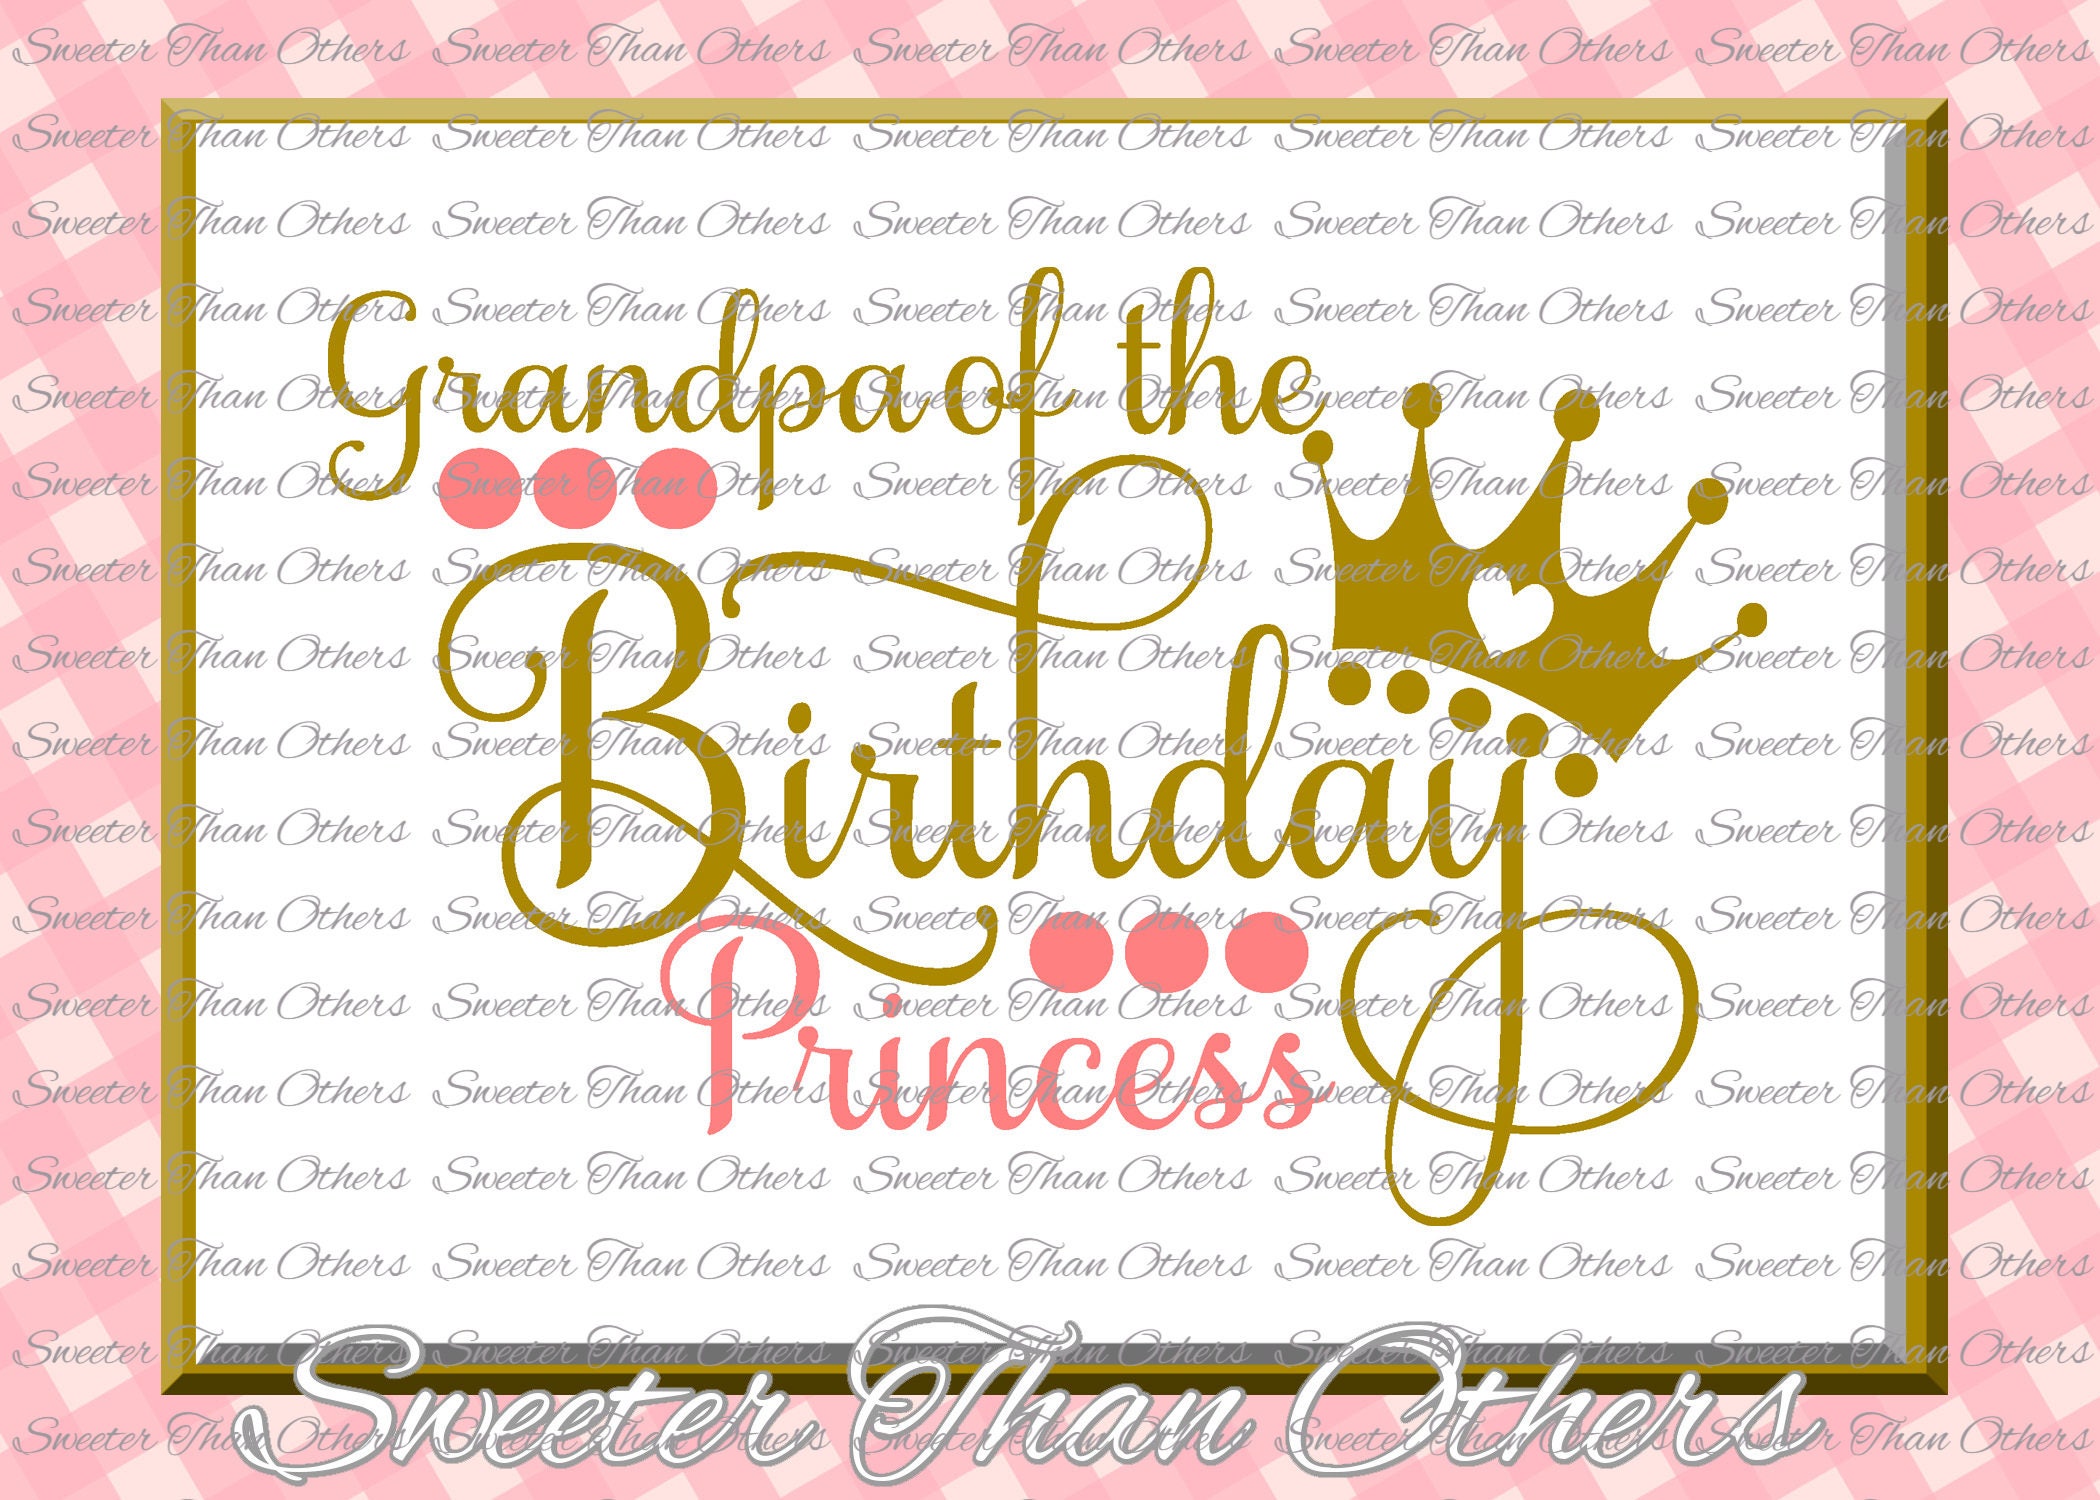 Free Free Birthday Princess Svg 440 SVG PNG EPS DXF File